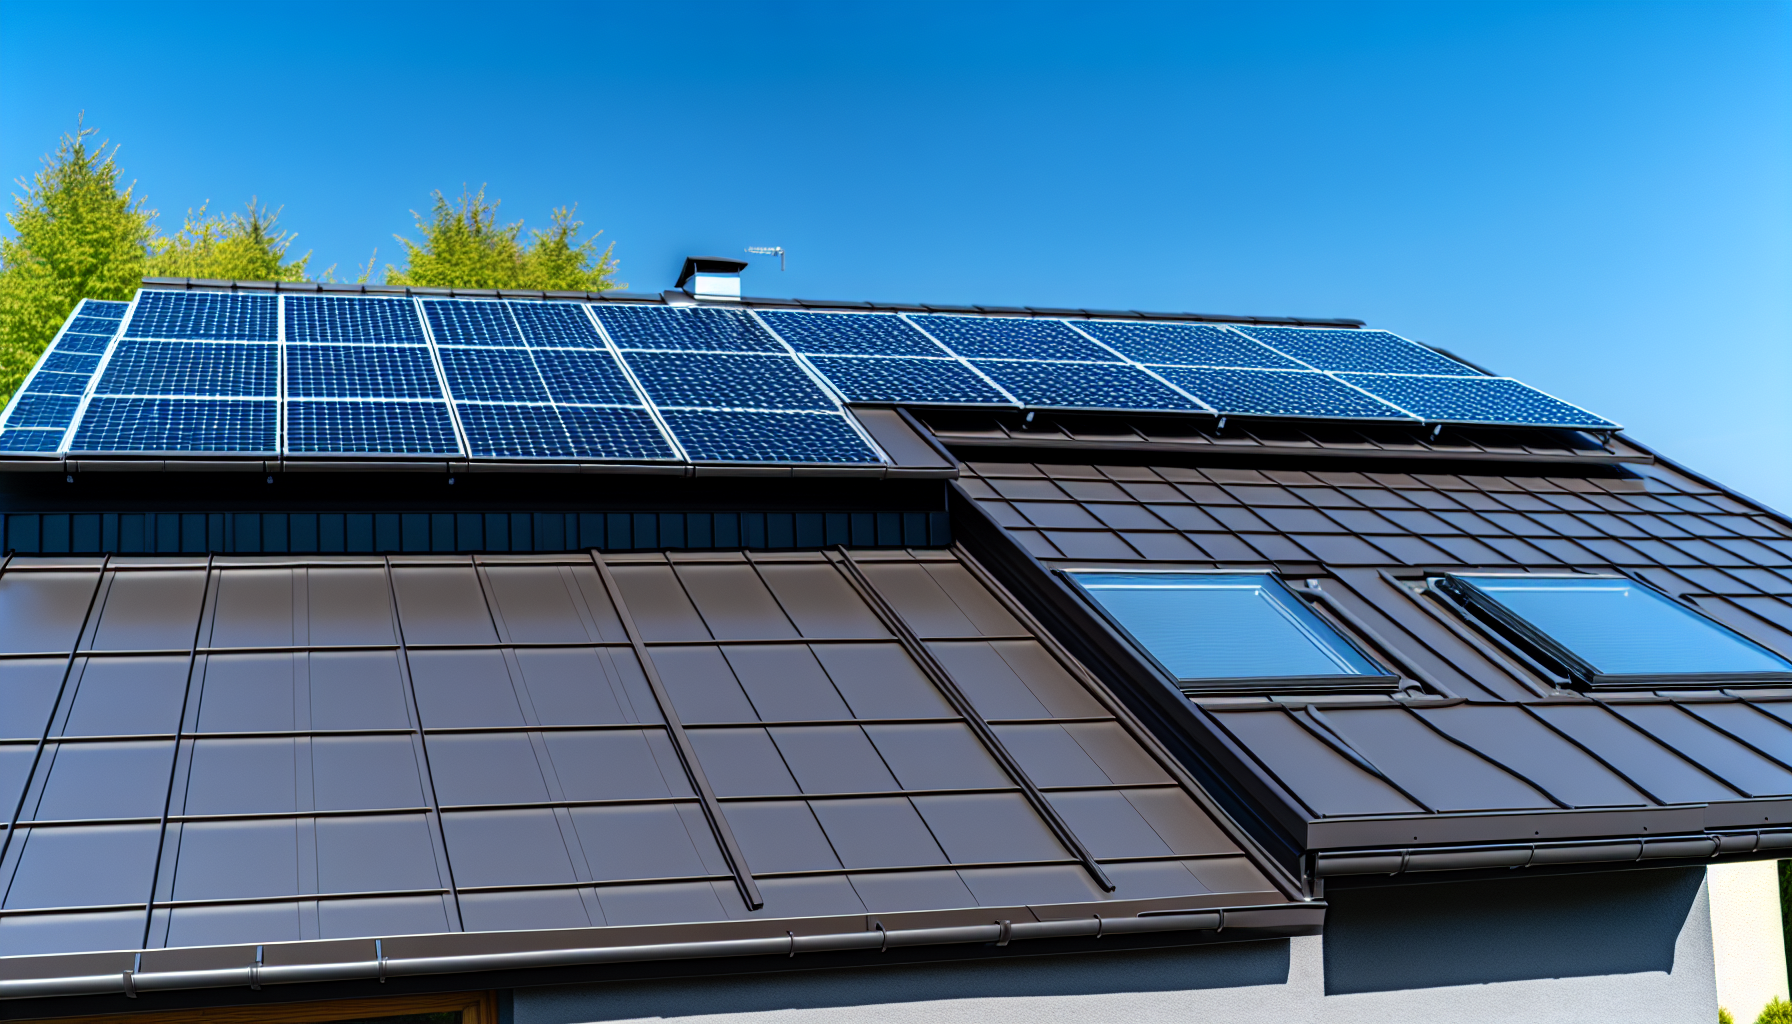 Solar panels absorbing sunlight on a rooftop